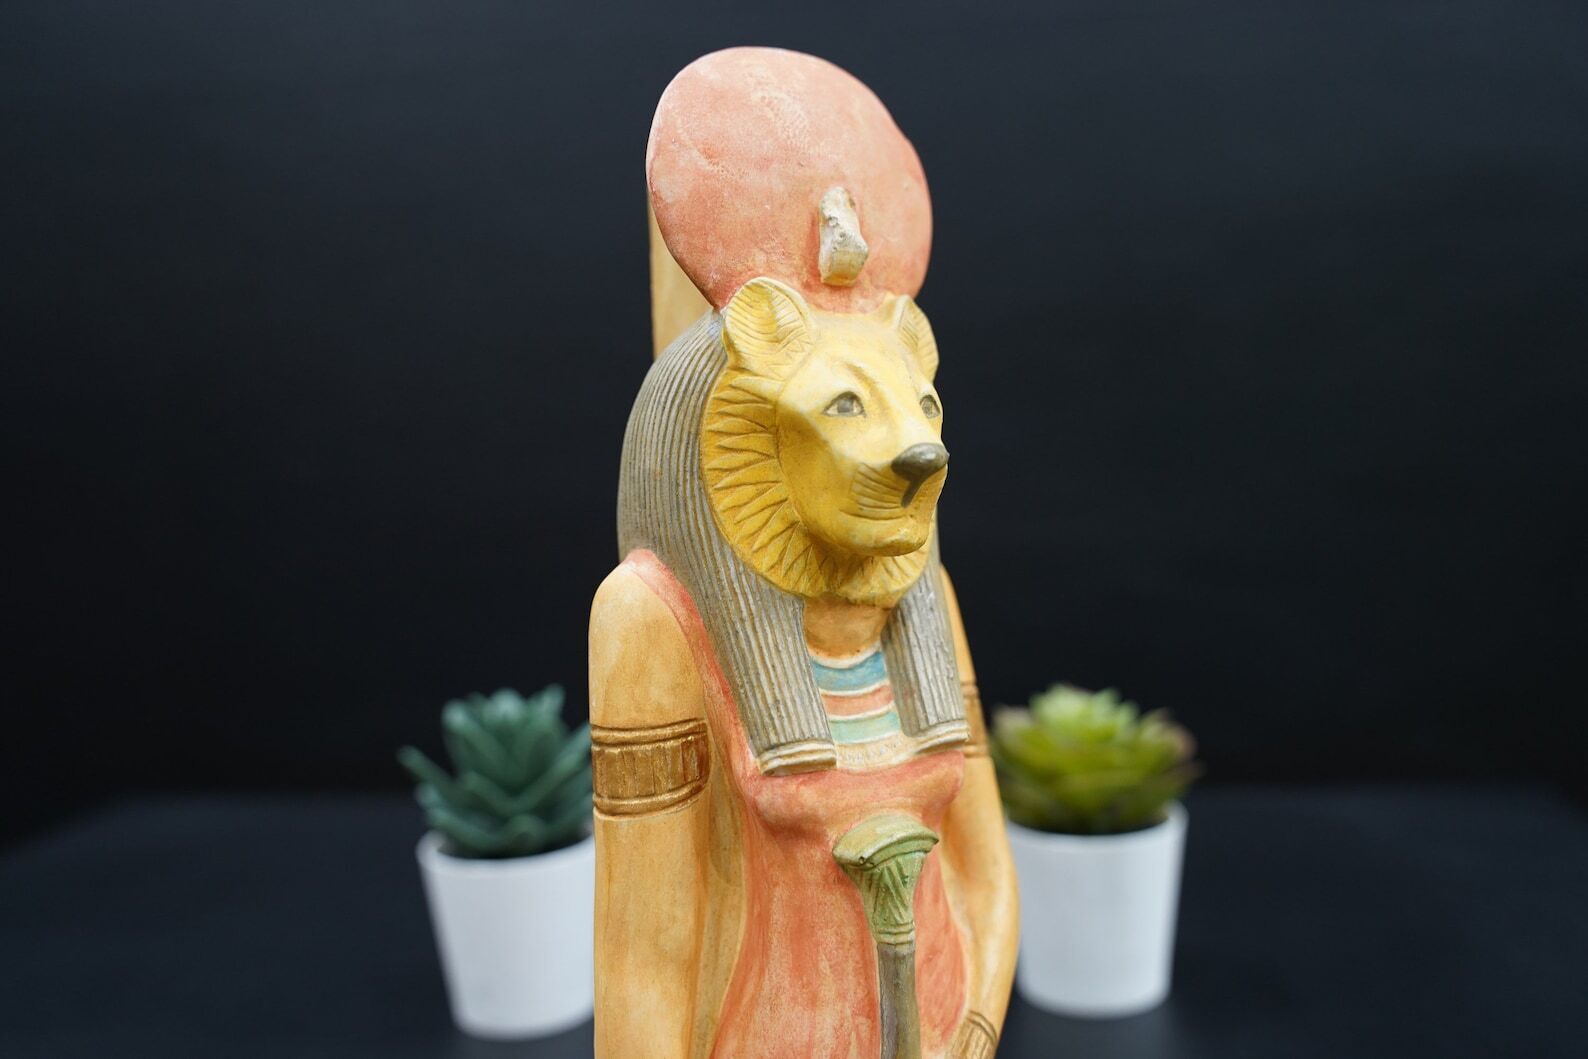 Sekhmet: Roar of Power, Healing, and Divine Wrath - made in Egypt